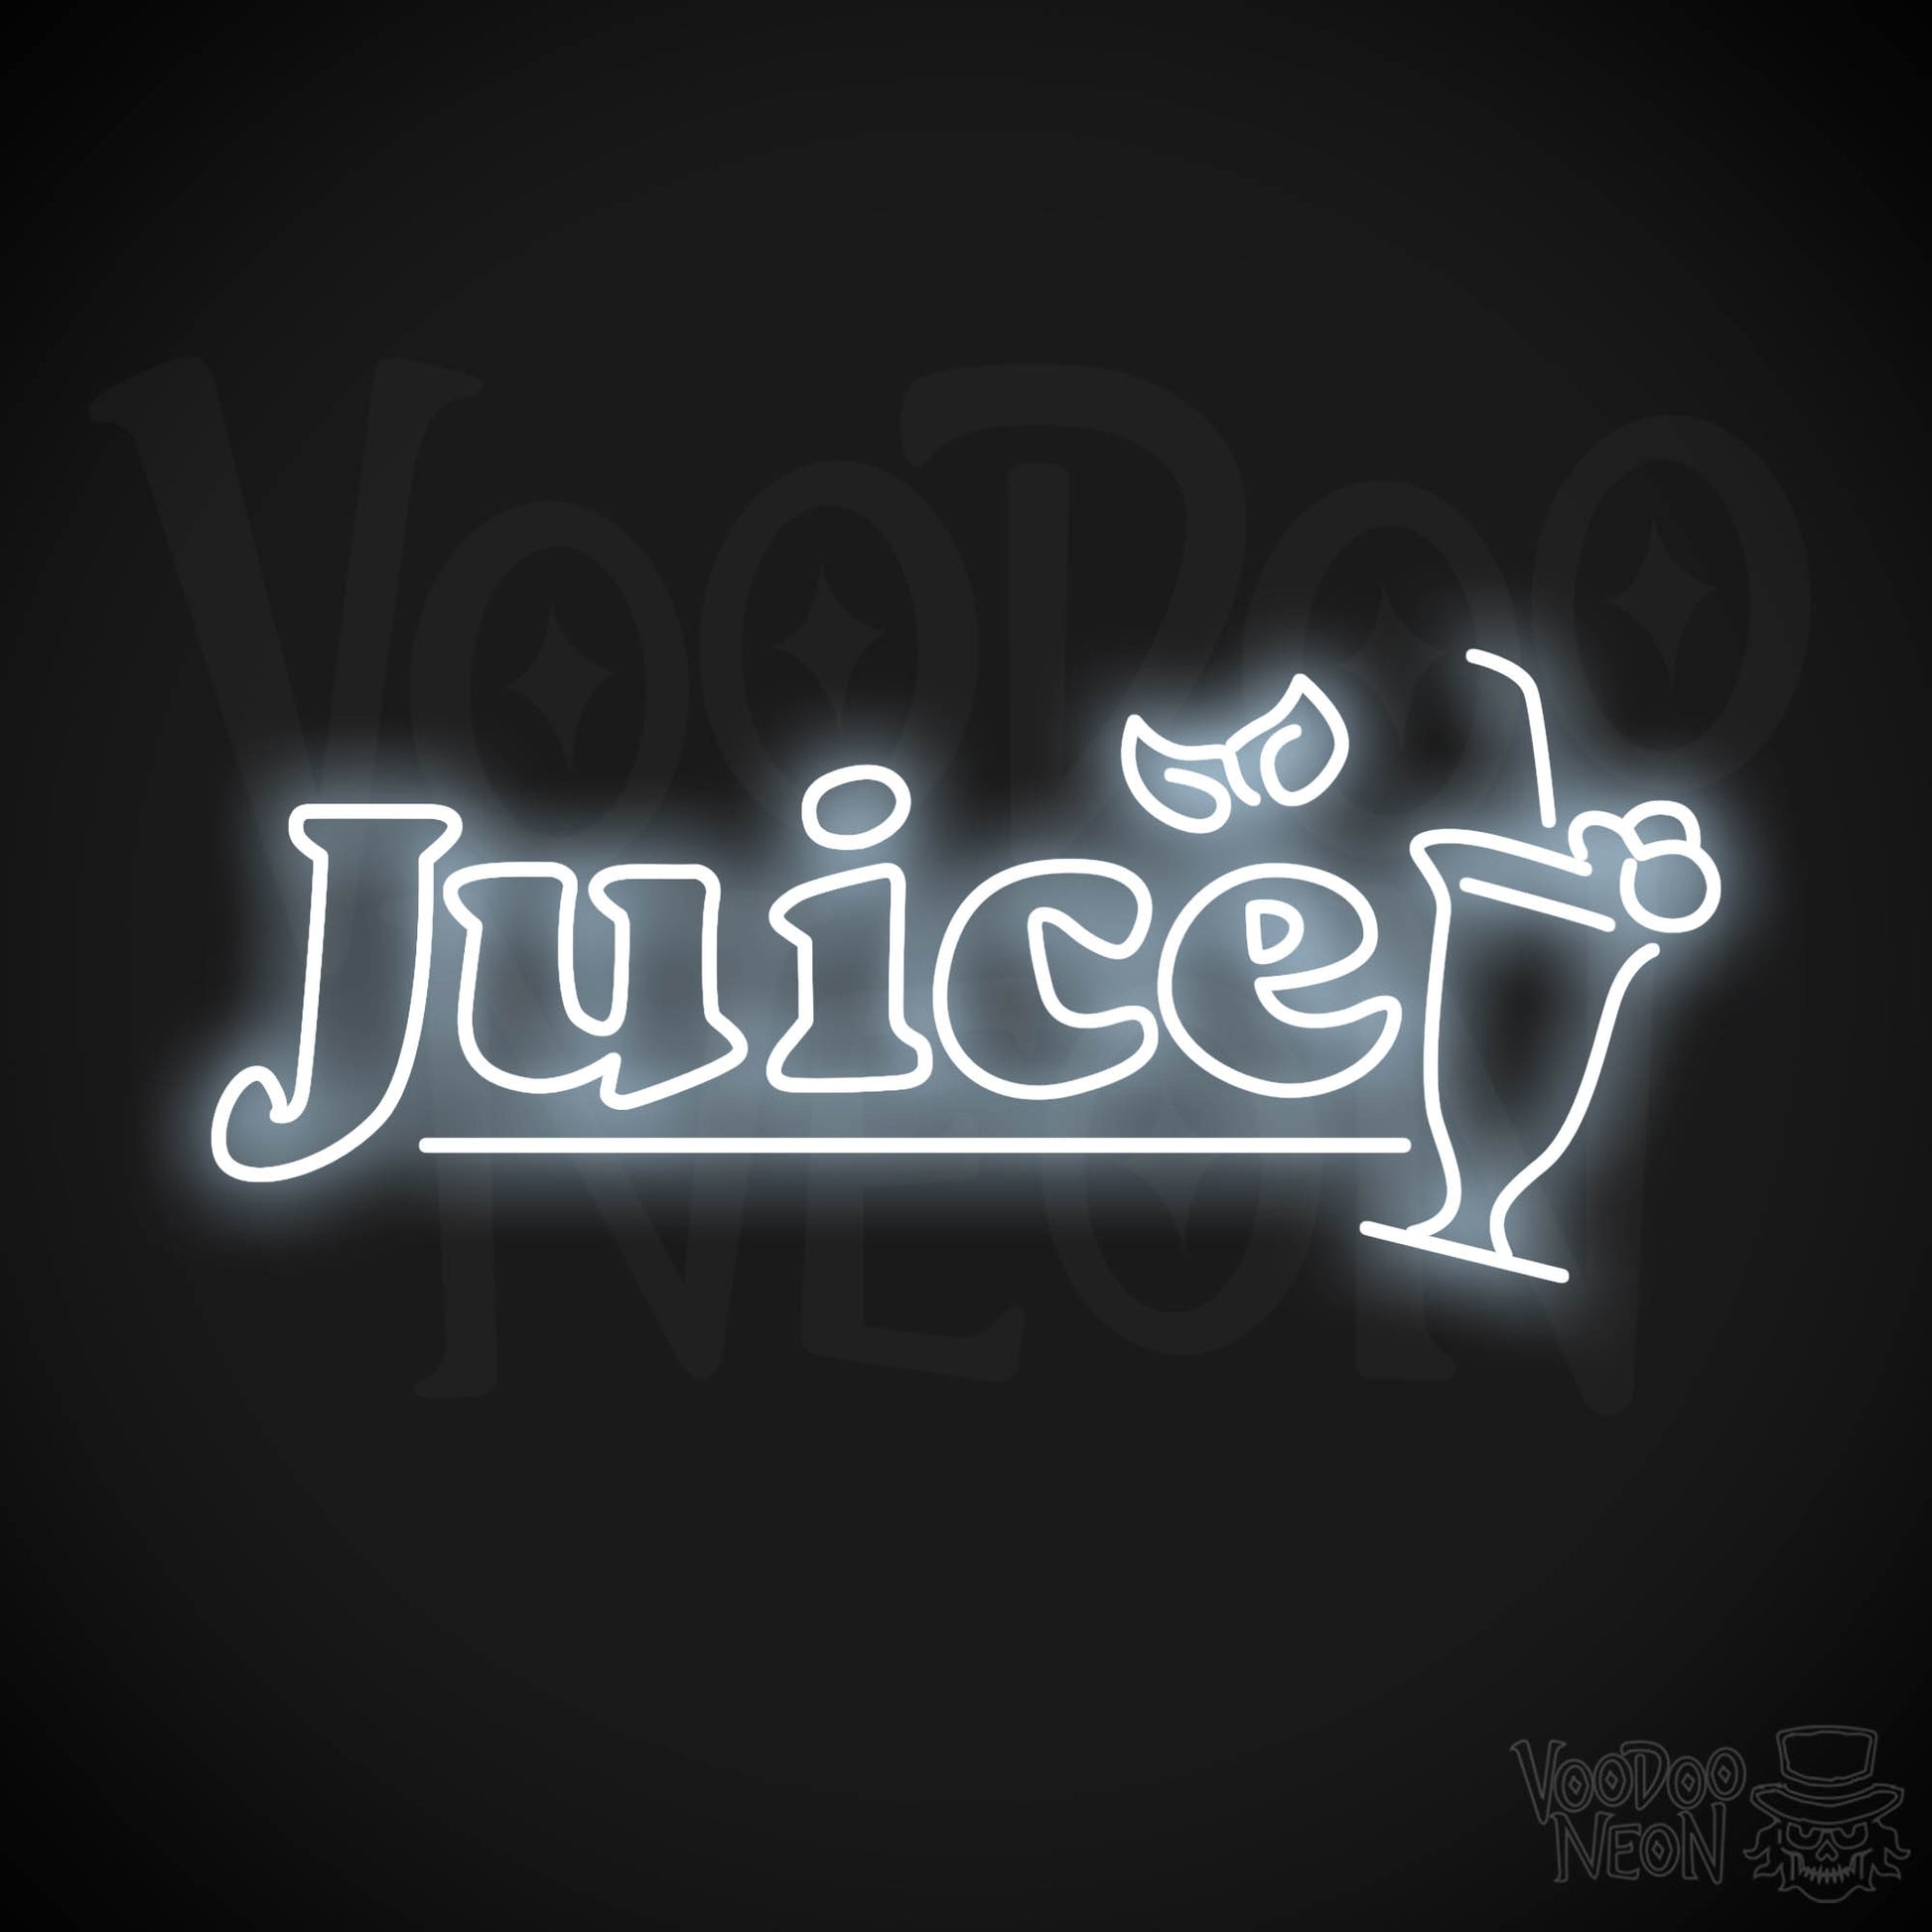 Juice LED Neon - Cool White